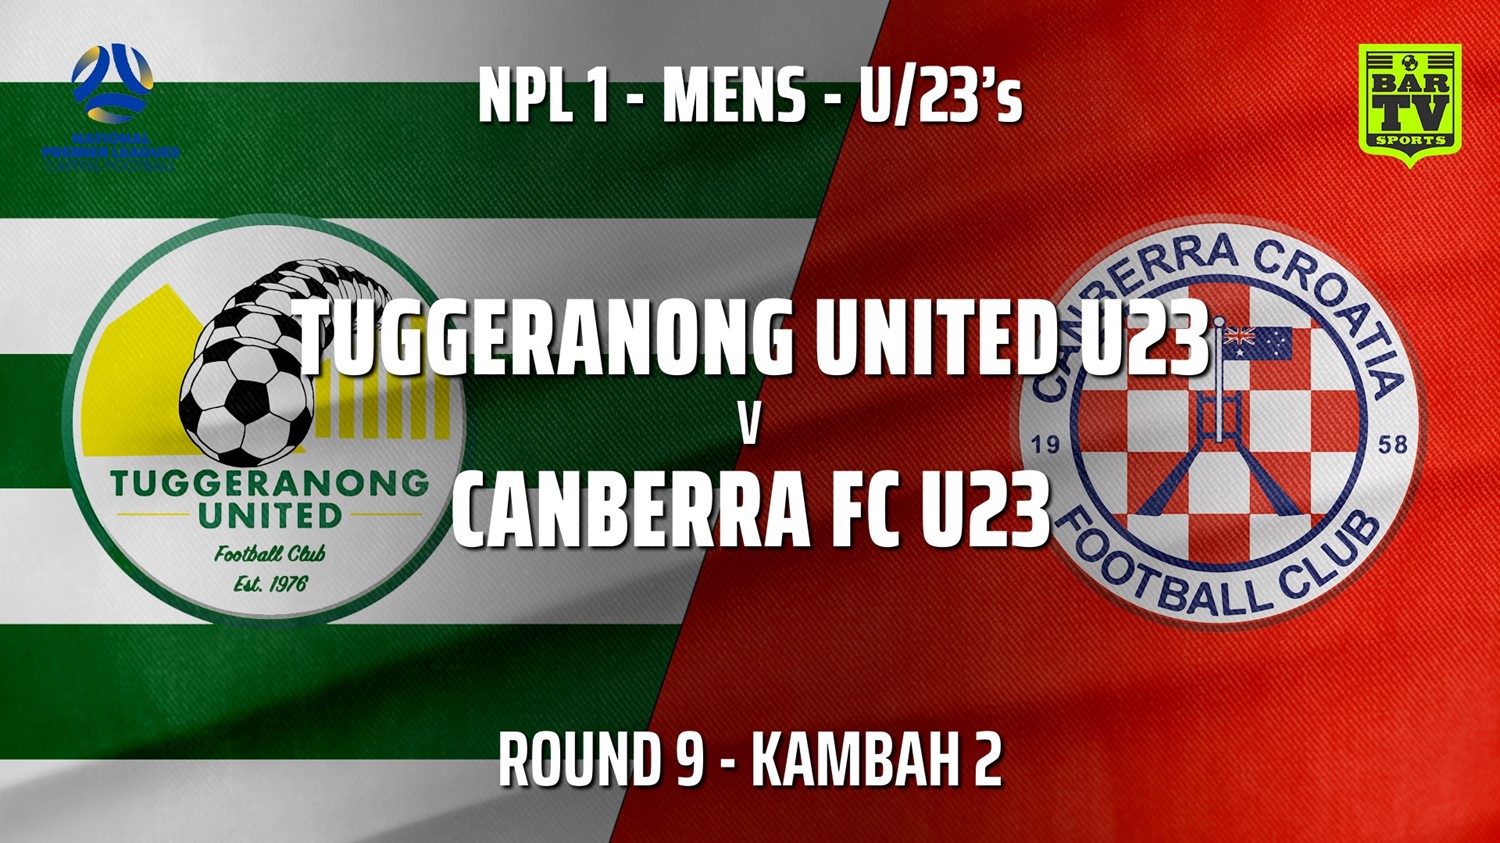 210613-Capital NPL U23 Round 9 - Tuggeranong United U23 v Canberra FC U23 Minigame Slate Image